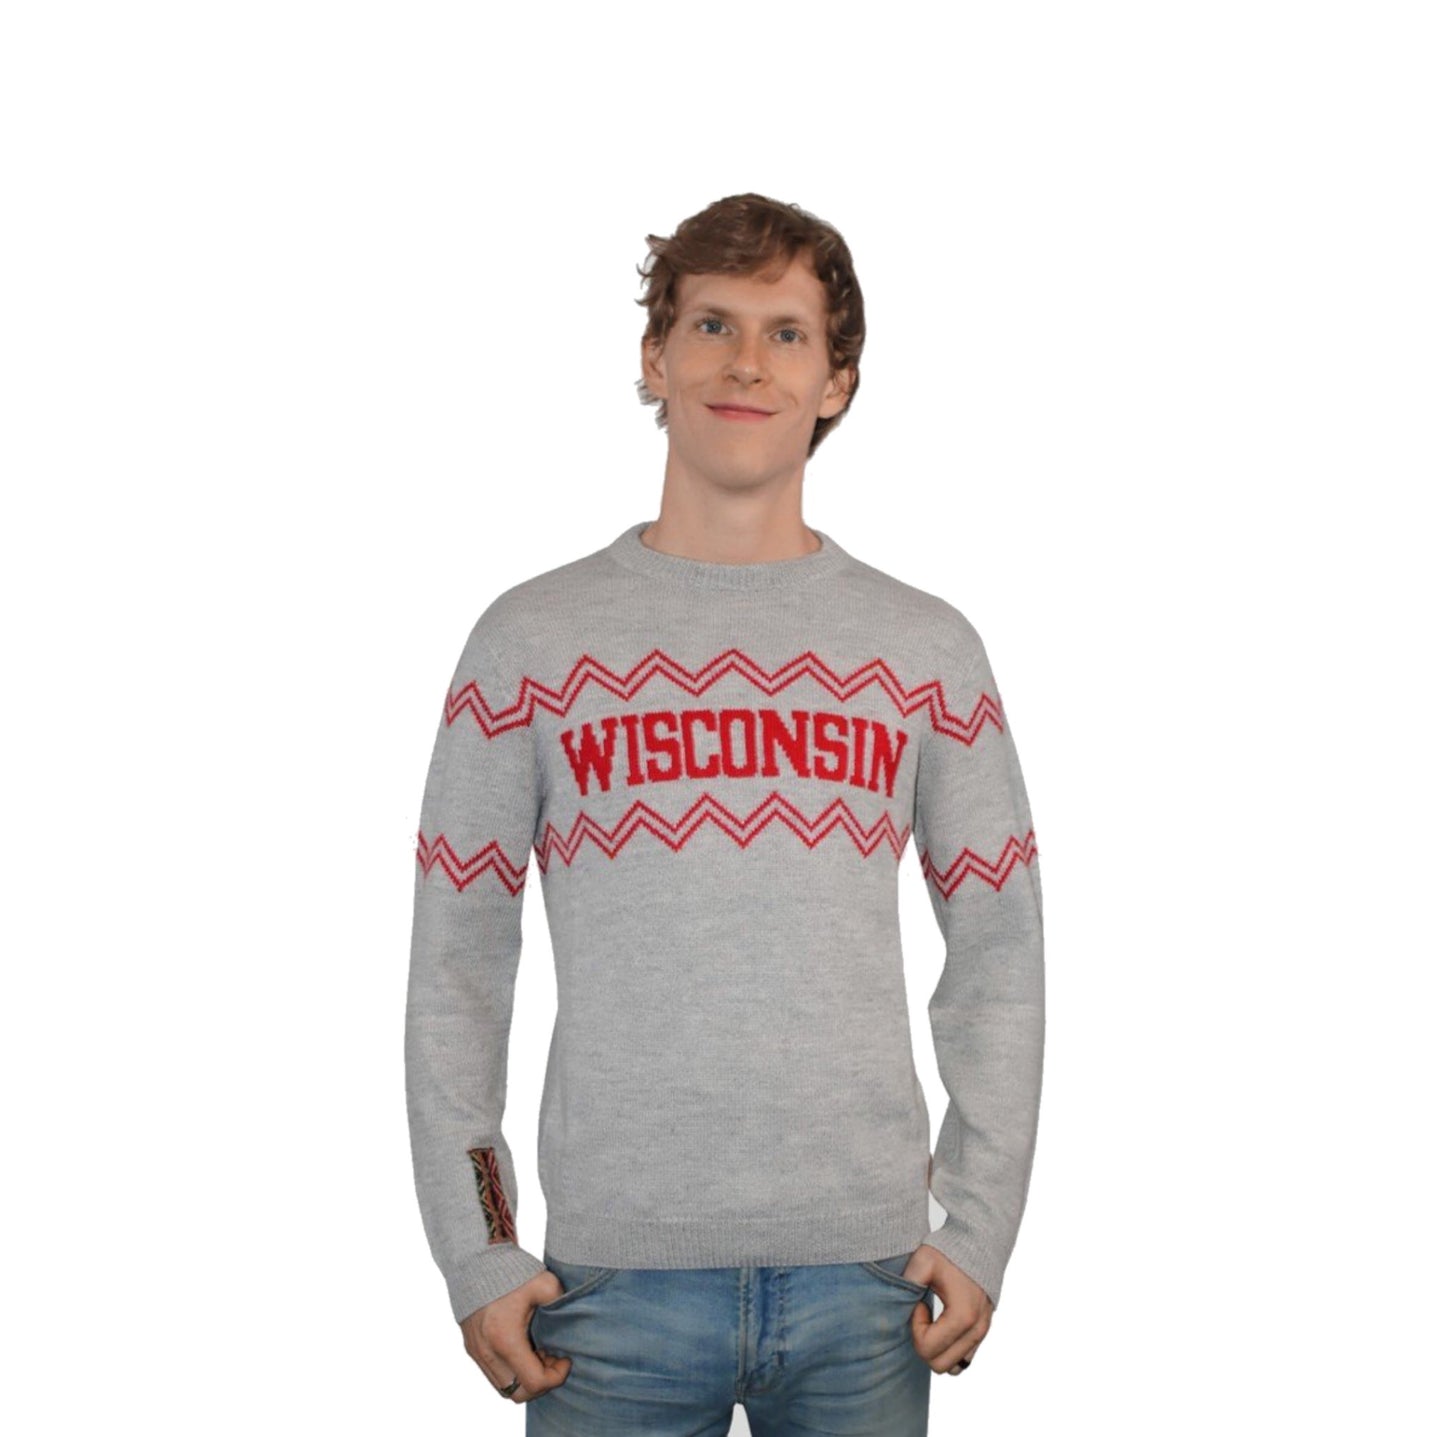 Wisconsin Crew Neck Alpaca Sweater - Light Gray